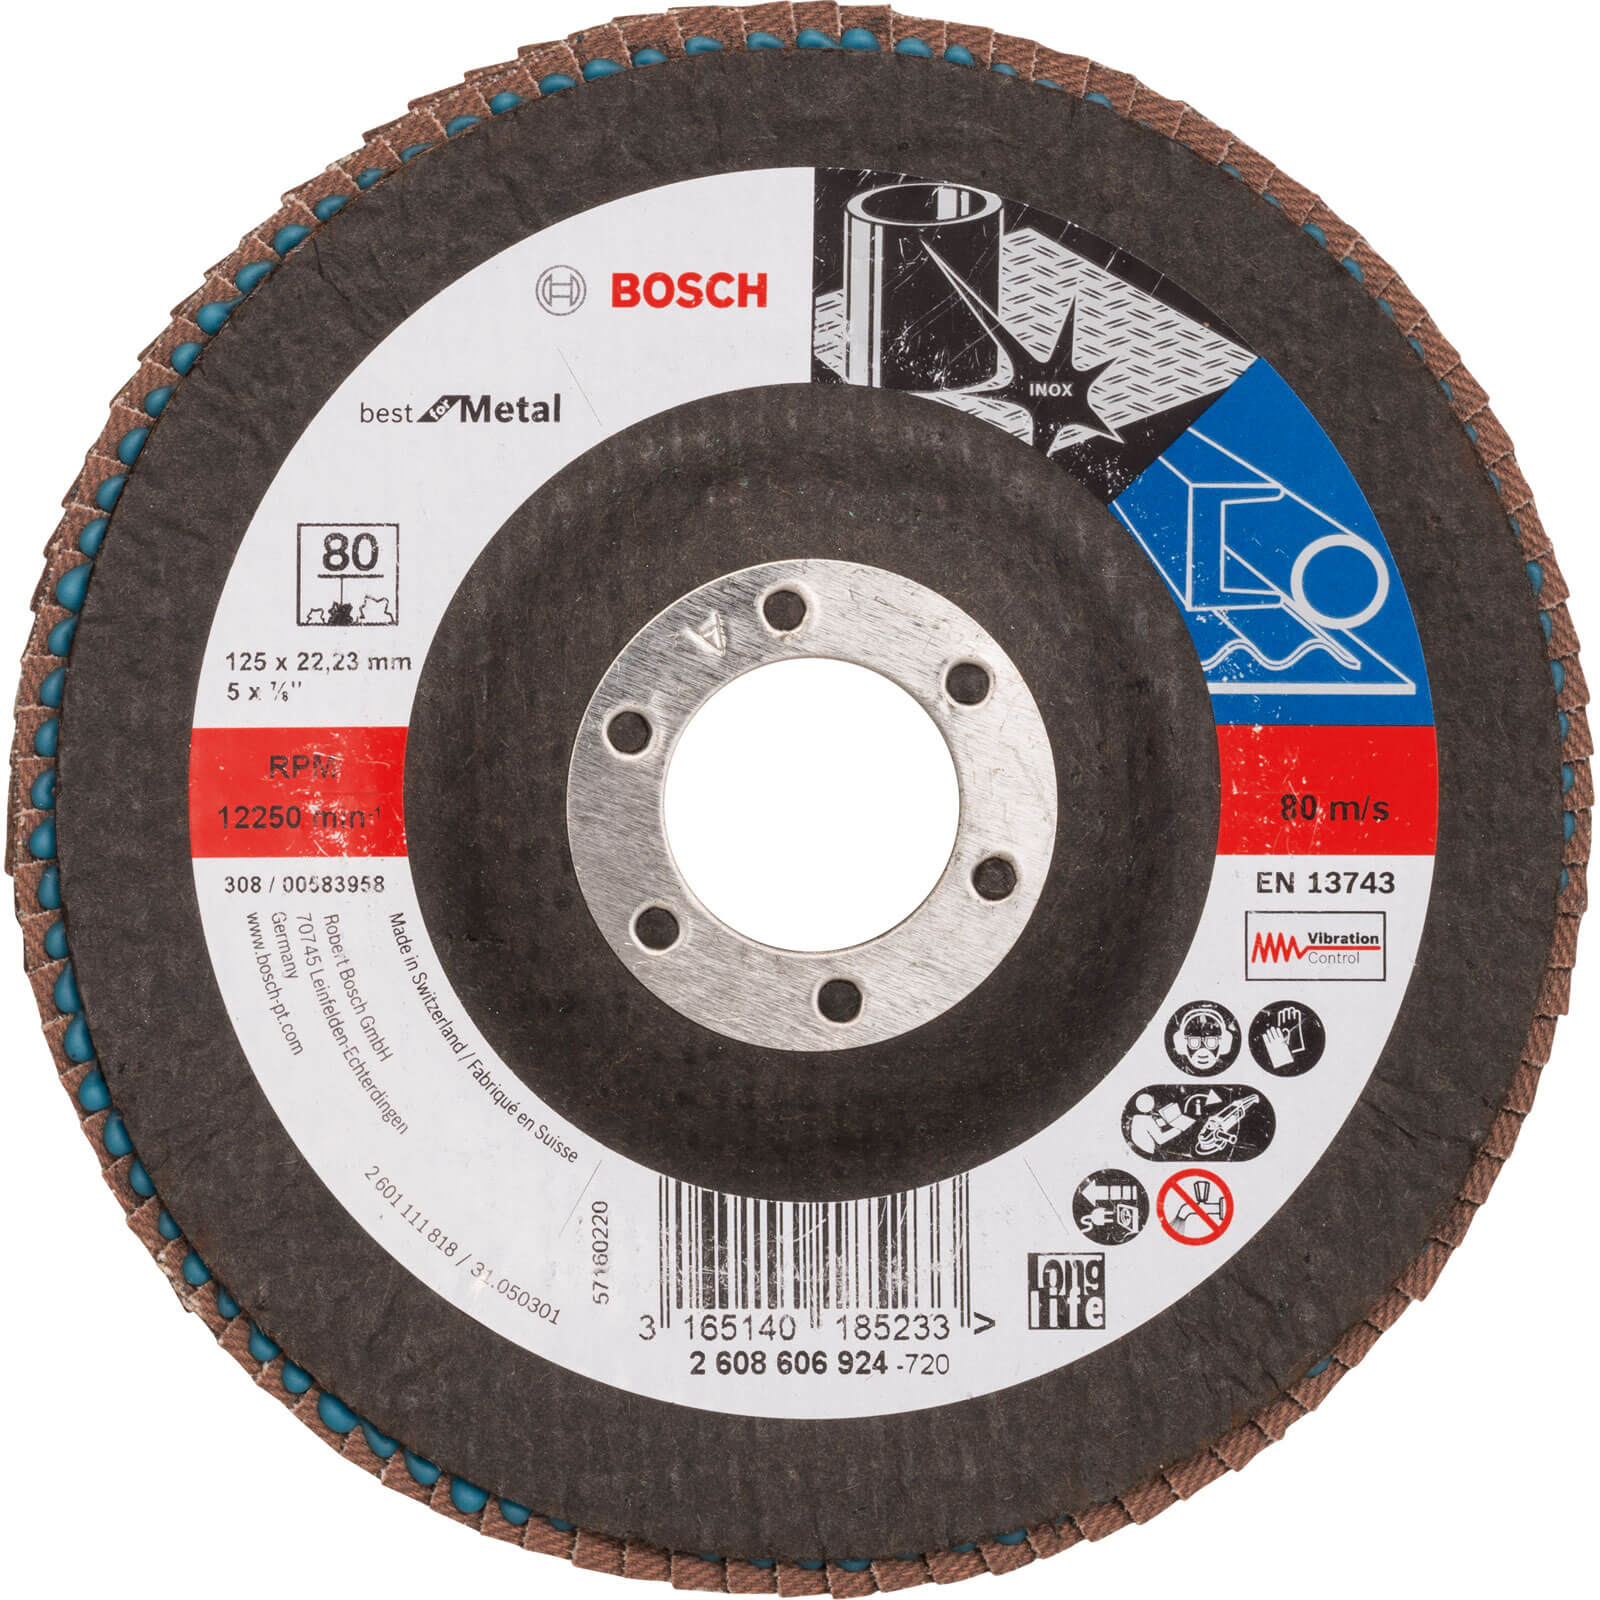 Photo of Bosch Zirconium Abrasive Flap Disc 125mm 80g